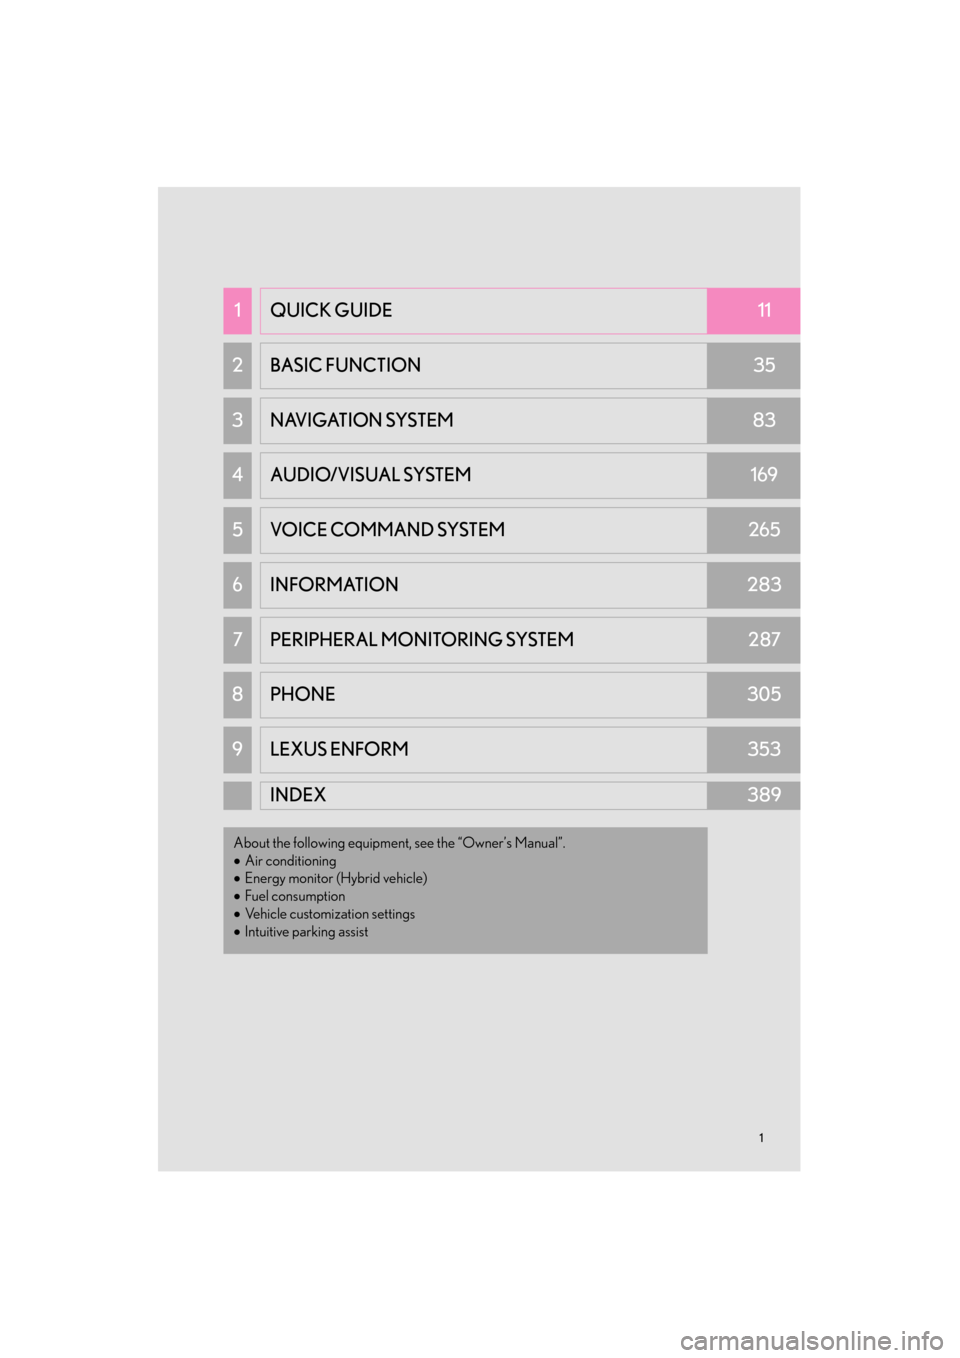 Lexus ES300h 2015  Navigation Manual 11
ES350/300h_Navi_OM33B43U_(U)14.06.23     09:44
1QUICK GUIDE11
2 BASIC FUNCTION35
3 NAVIGATION SYSTEM83
4AUDIO/VISUAL SYSTEM169
5VOICE COMMAND SYSTEM265
6INFORMATION283
7PERIPHERAL MONITORING SYSTEM